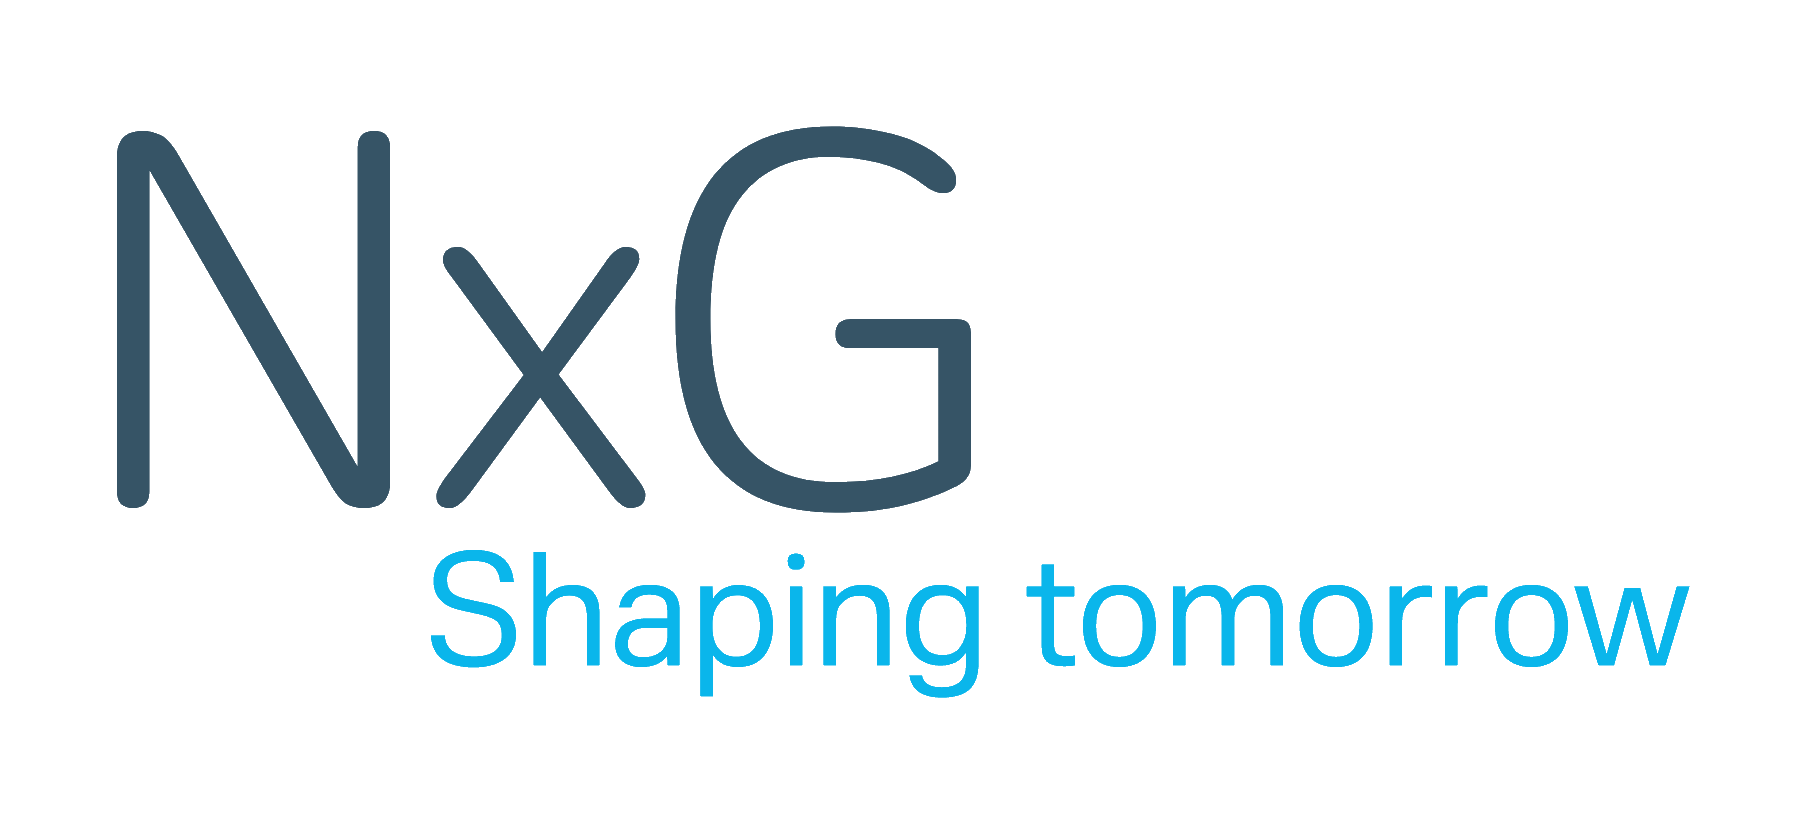 Next-gen-logo-TR_shaping_tomorrow.png